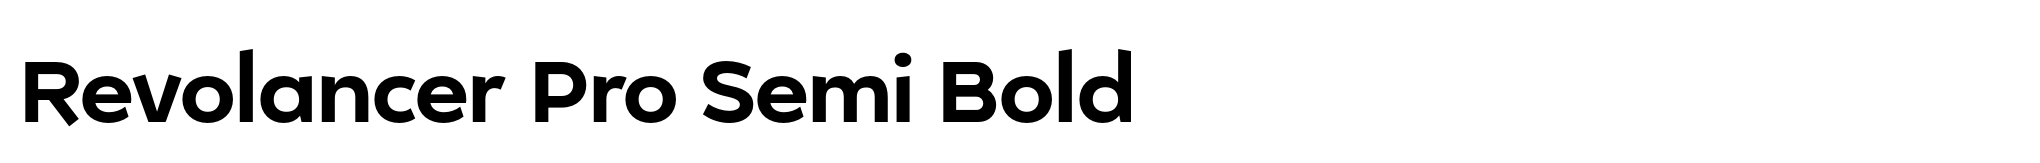 Revolancer Pro Semi Bold image